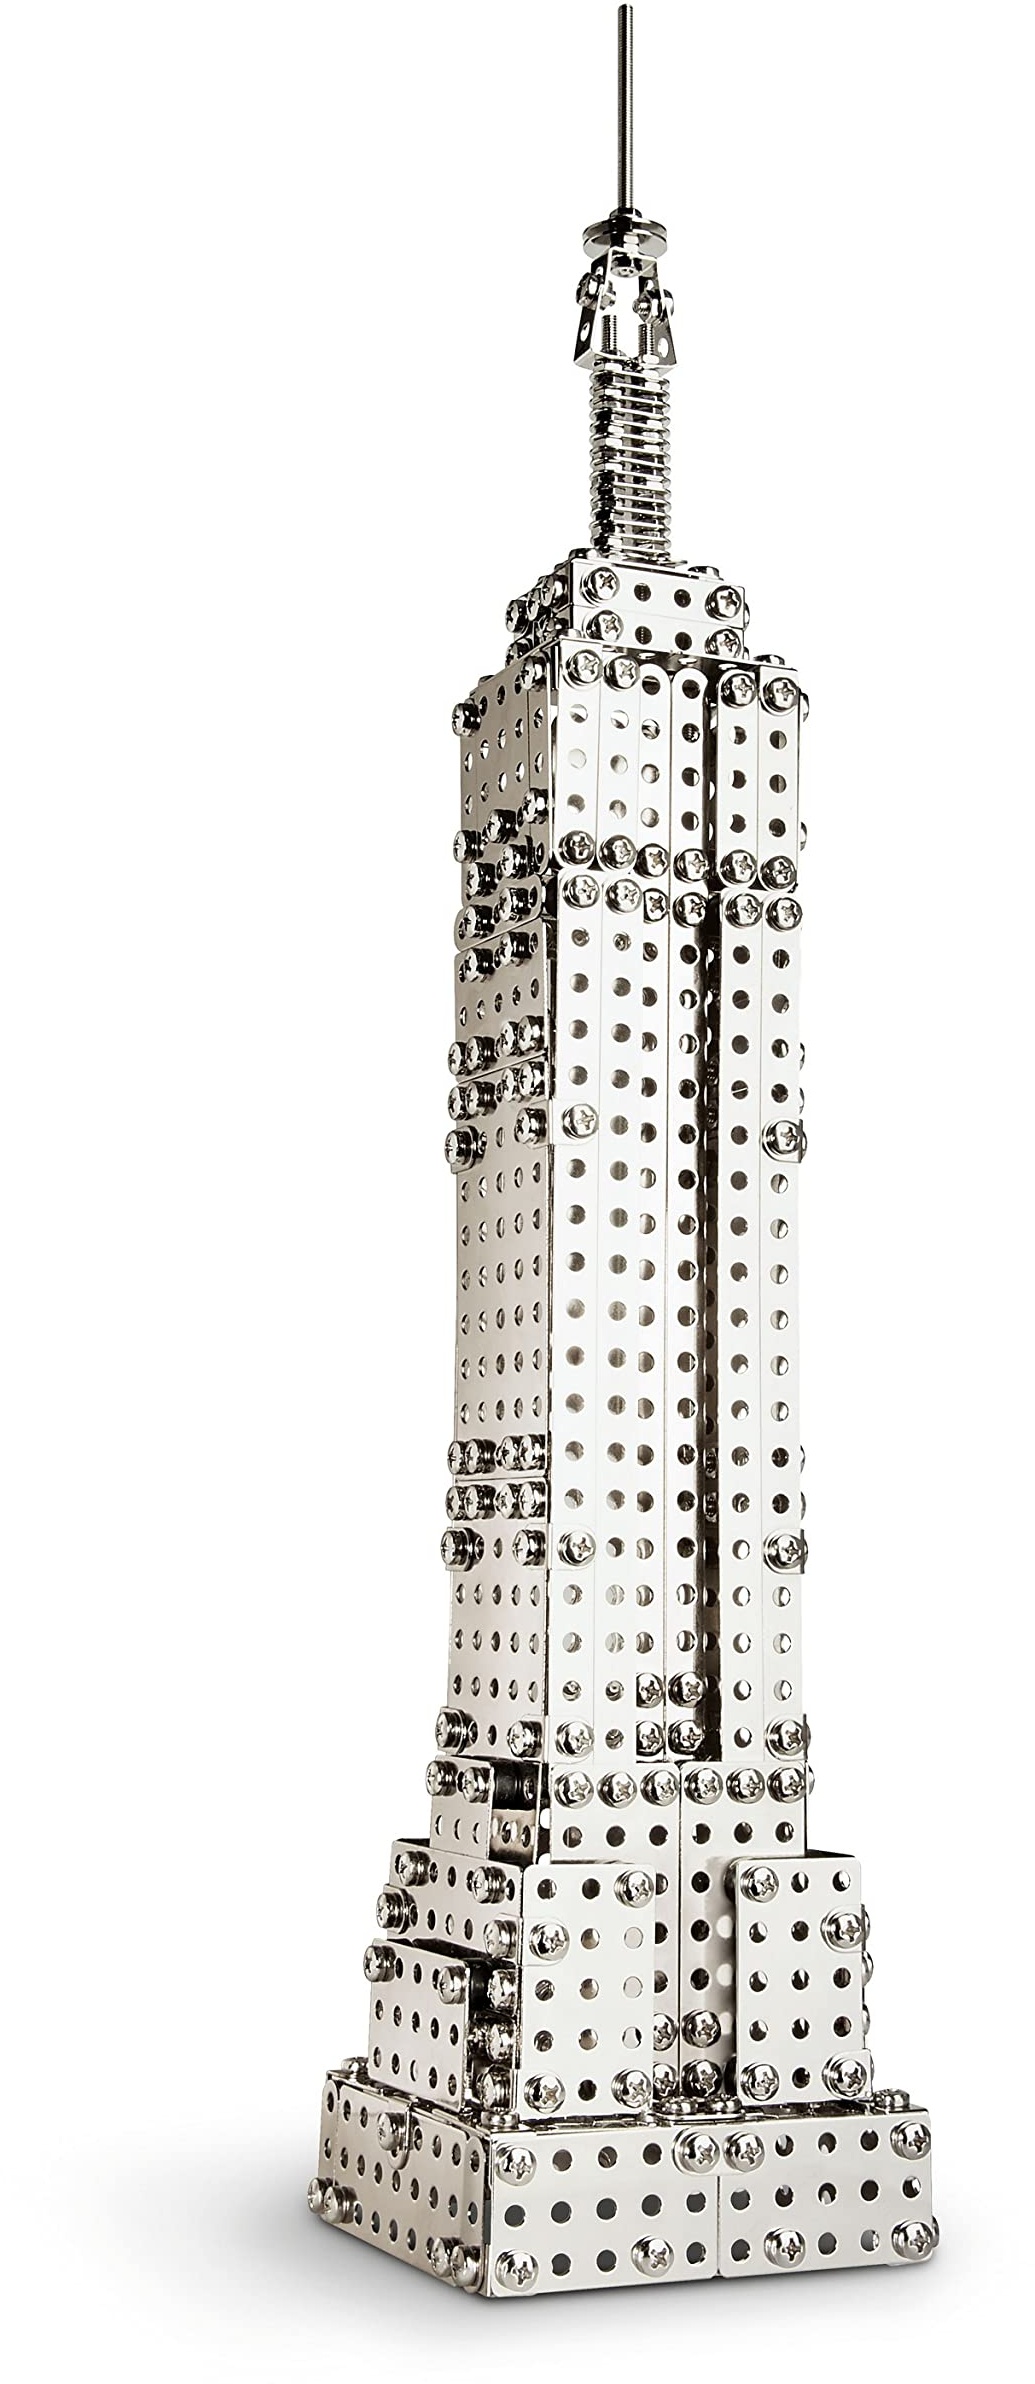 Eitech 00470 00470-Metallbaukasten-Empire State Building Set, 815-teilig, Multi Color